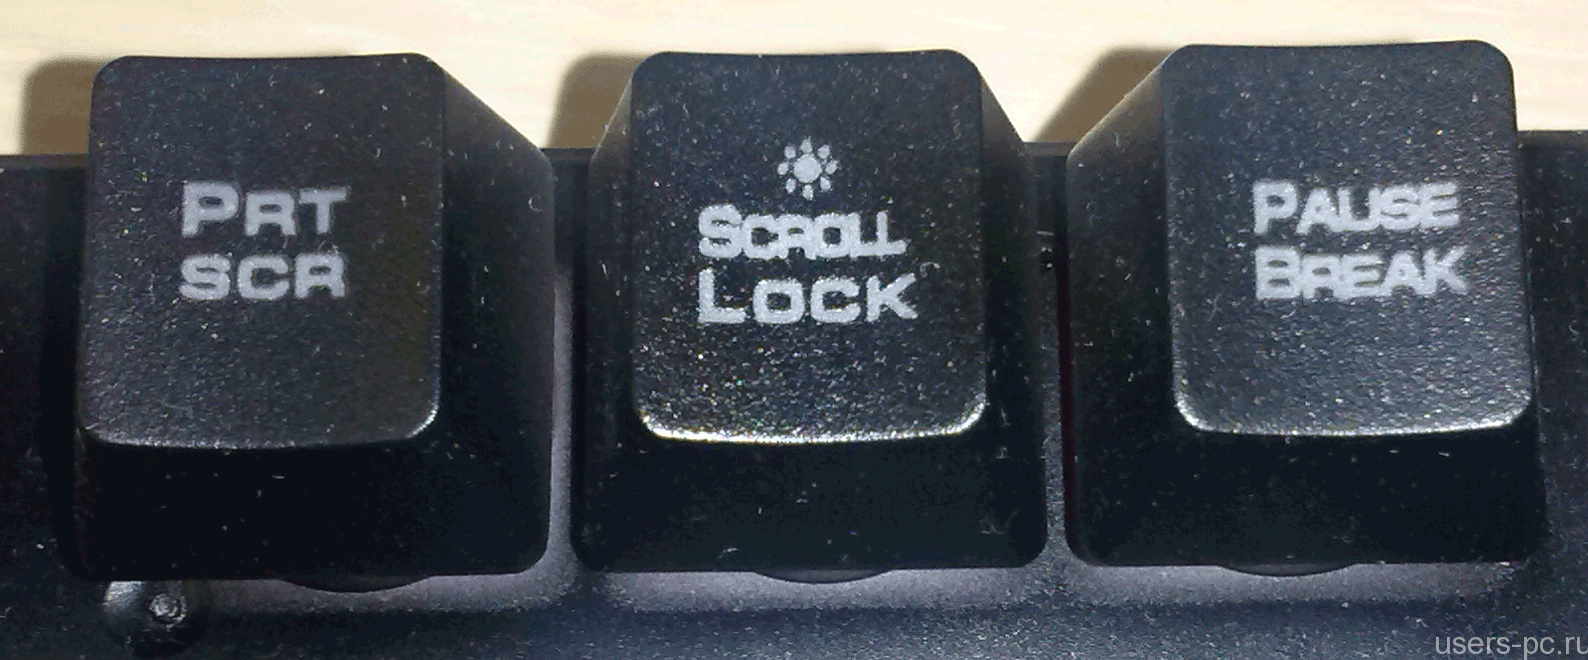 Scroll-Lock.png